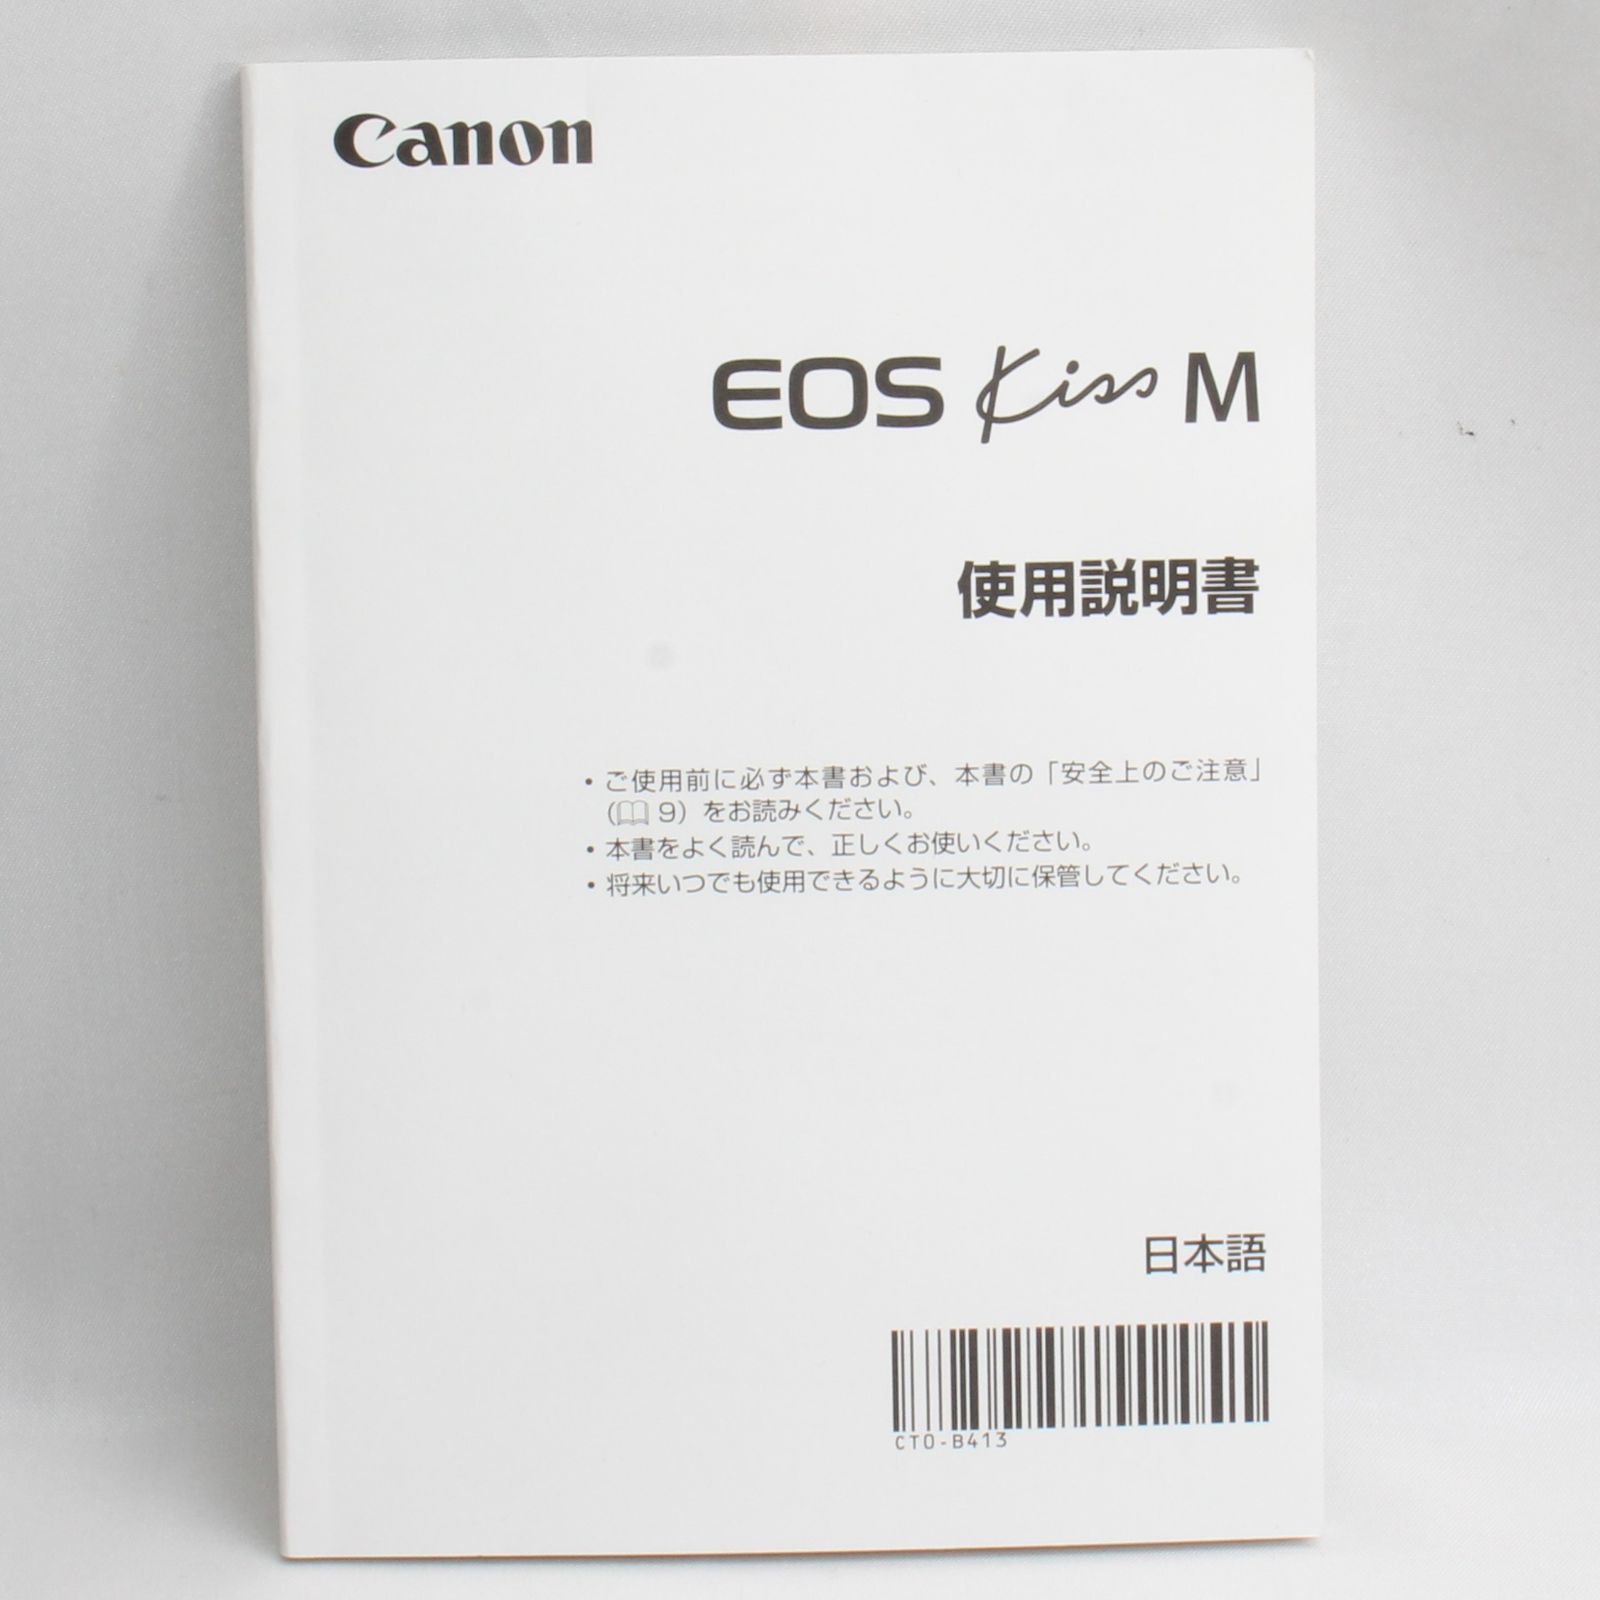 ❤️キヤノン Canon EOS Kiss M 取扱使用説明書❤️ - PRO CAMERA SHOP